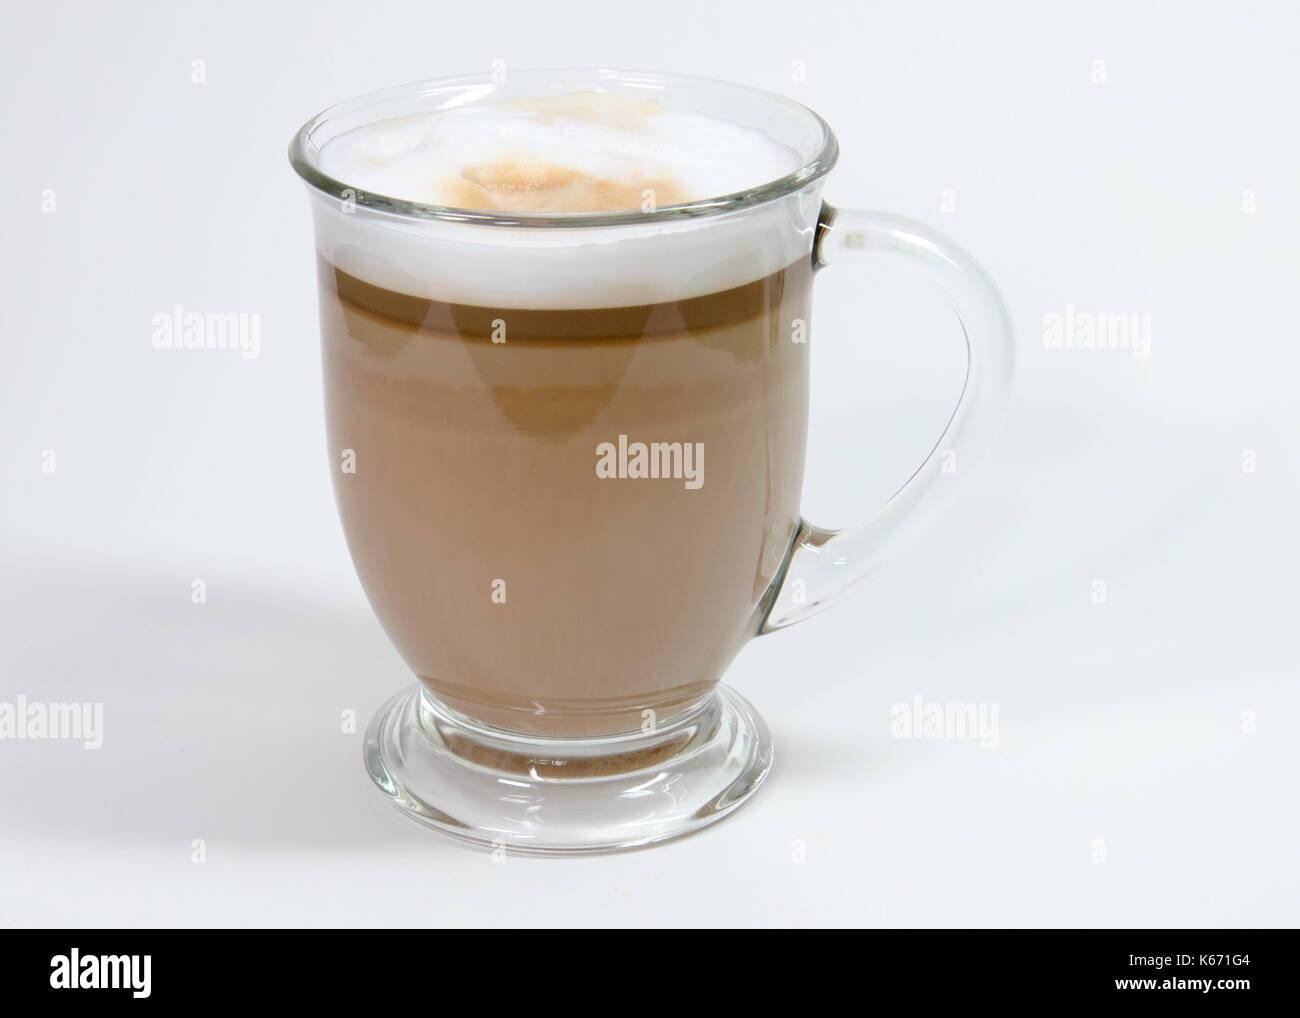 https://c8.alamy.com/comp/K671G4/latte-in-clear-glass-with-foam-K671G4.jpg